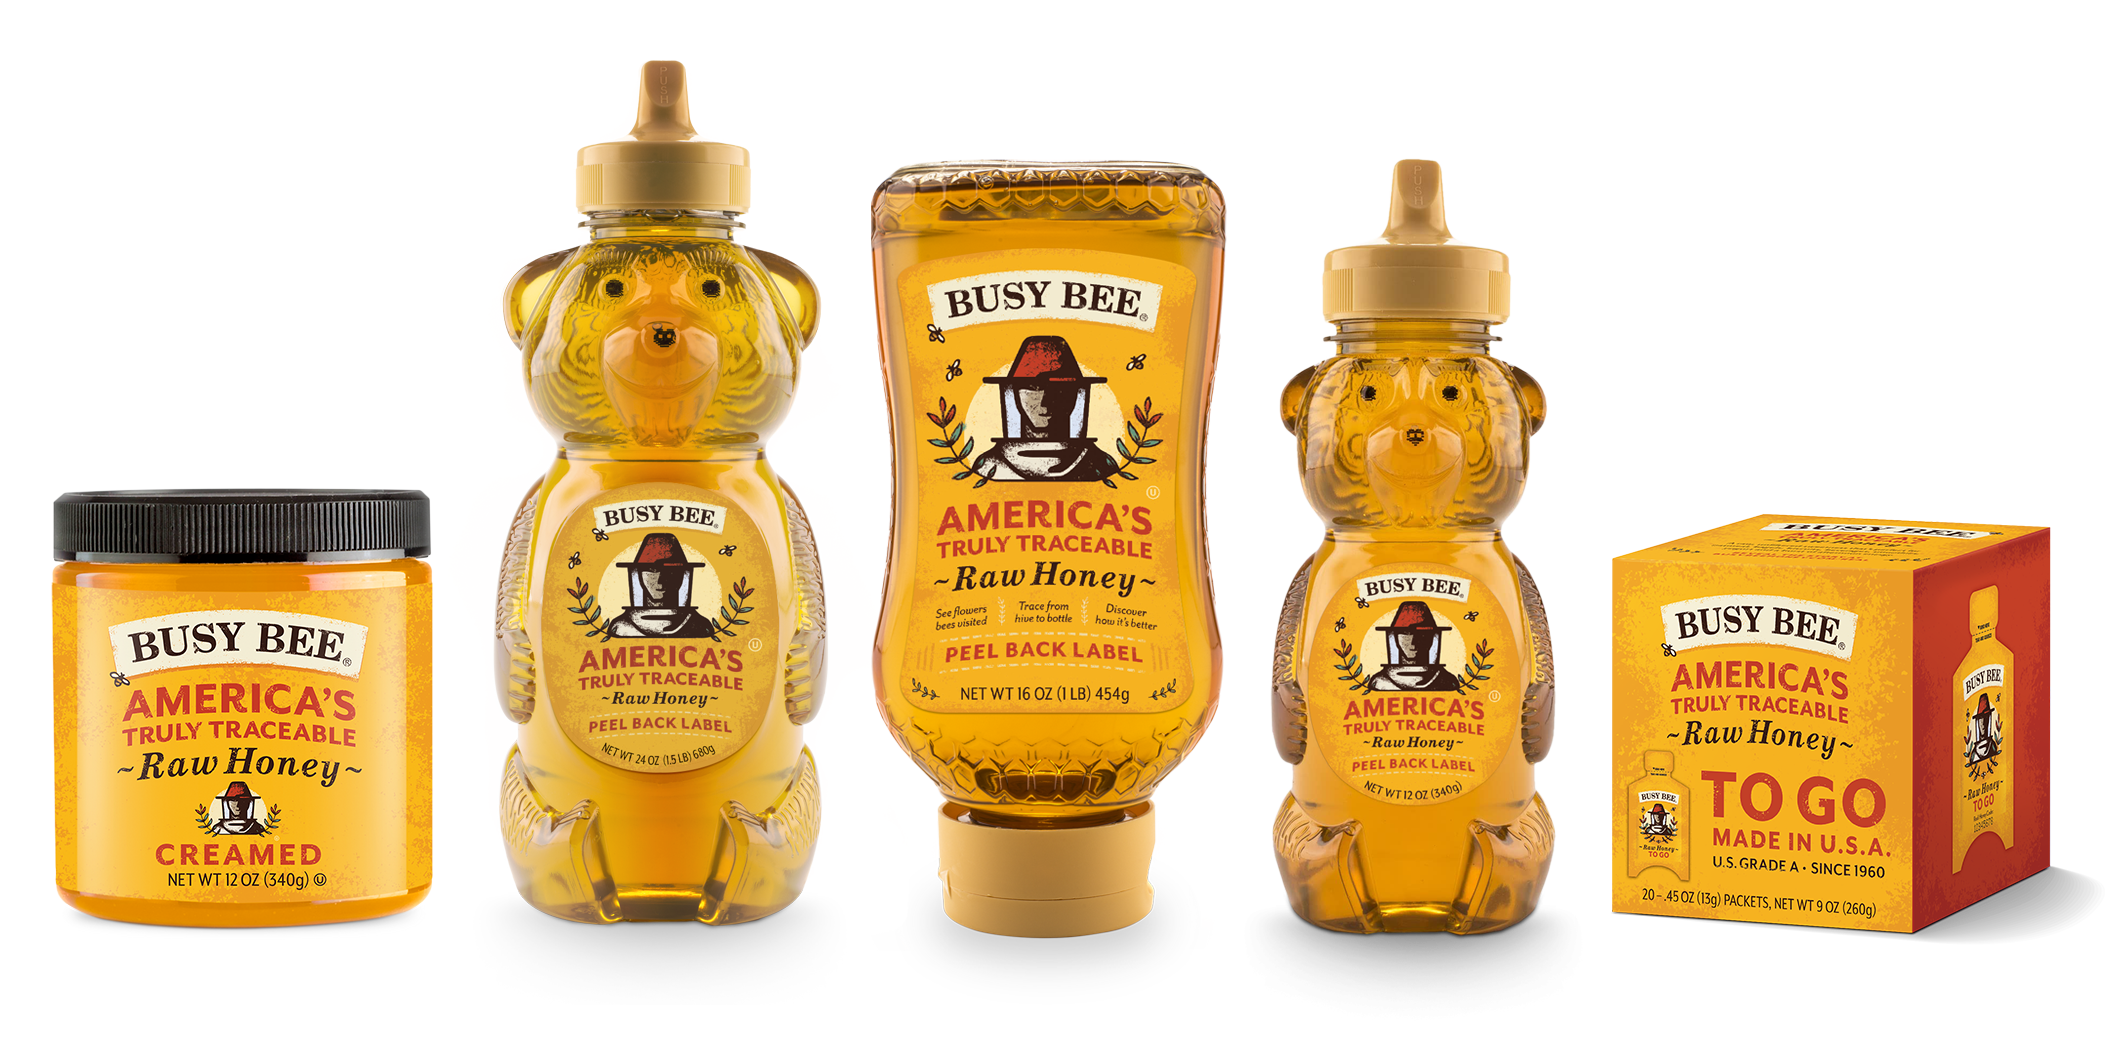 Busy Bee Products including 16 ounce bottle, 24 ounce bear, 12 ounce creamed honey jar, 12 ounce bear, and box of 10 to-go packets